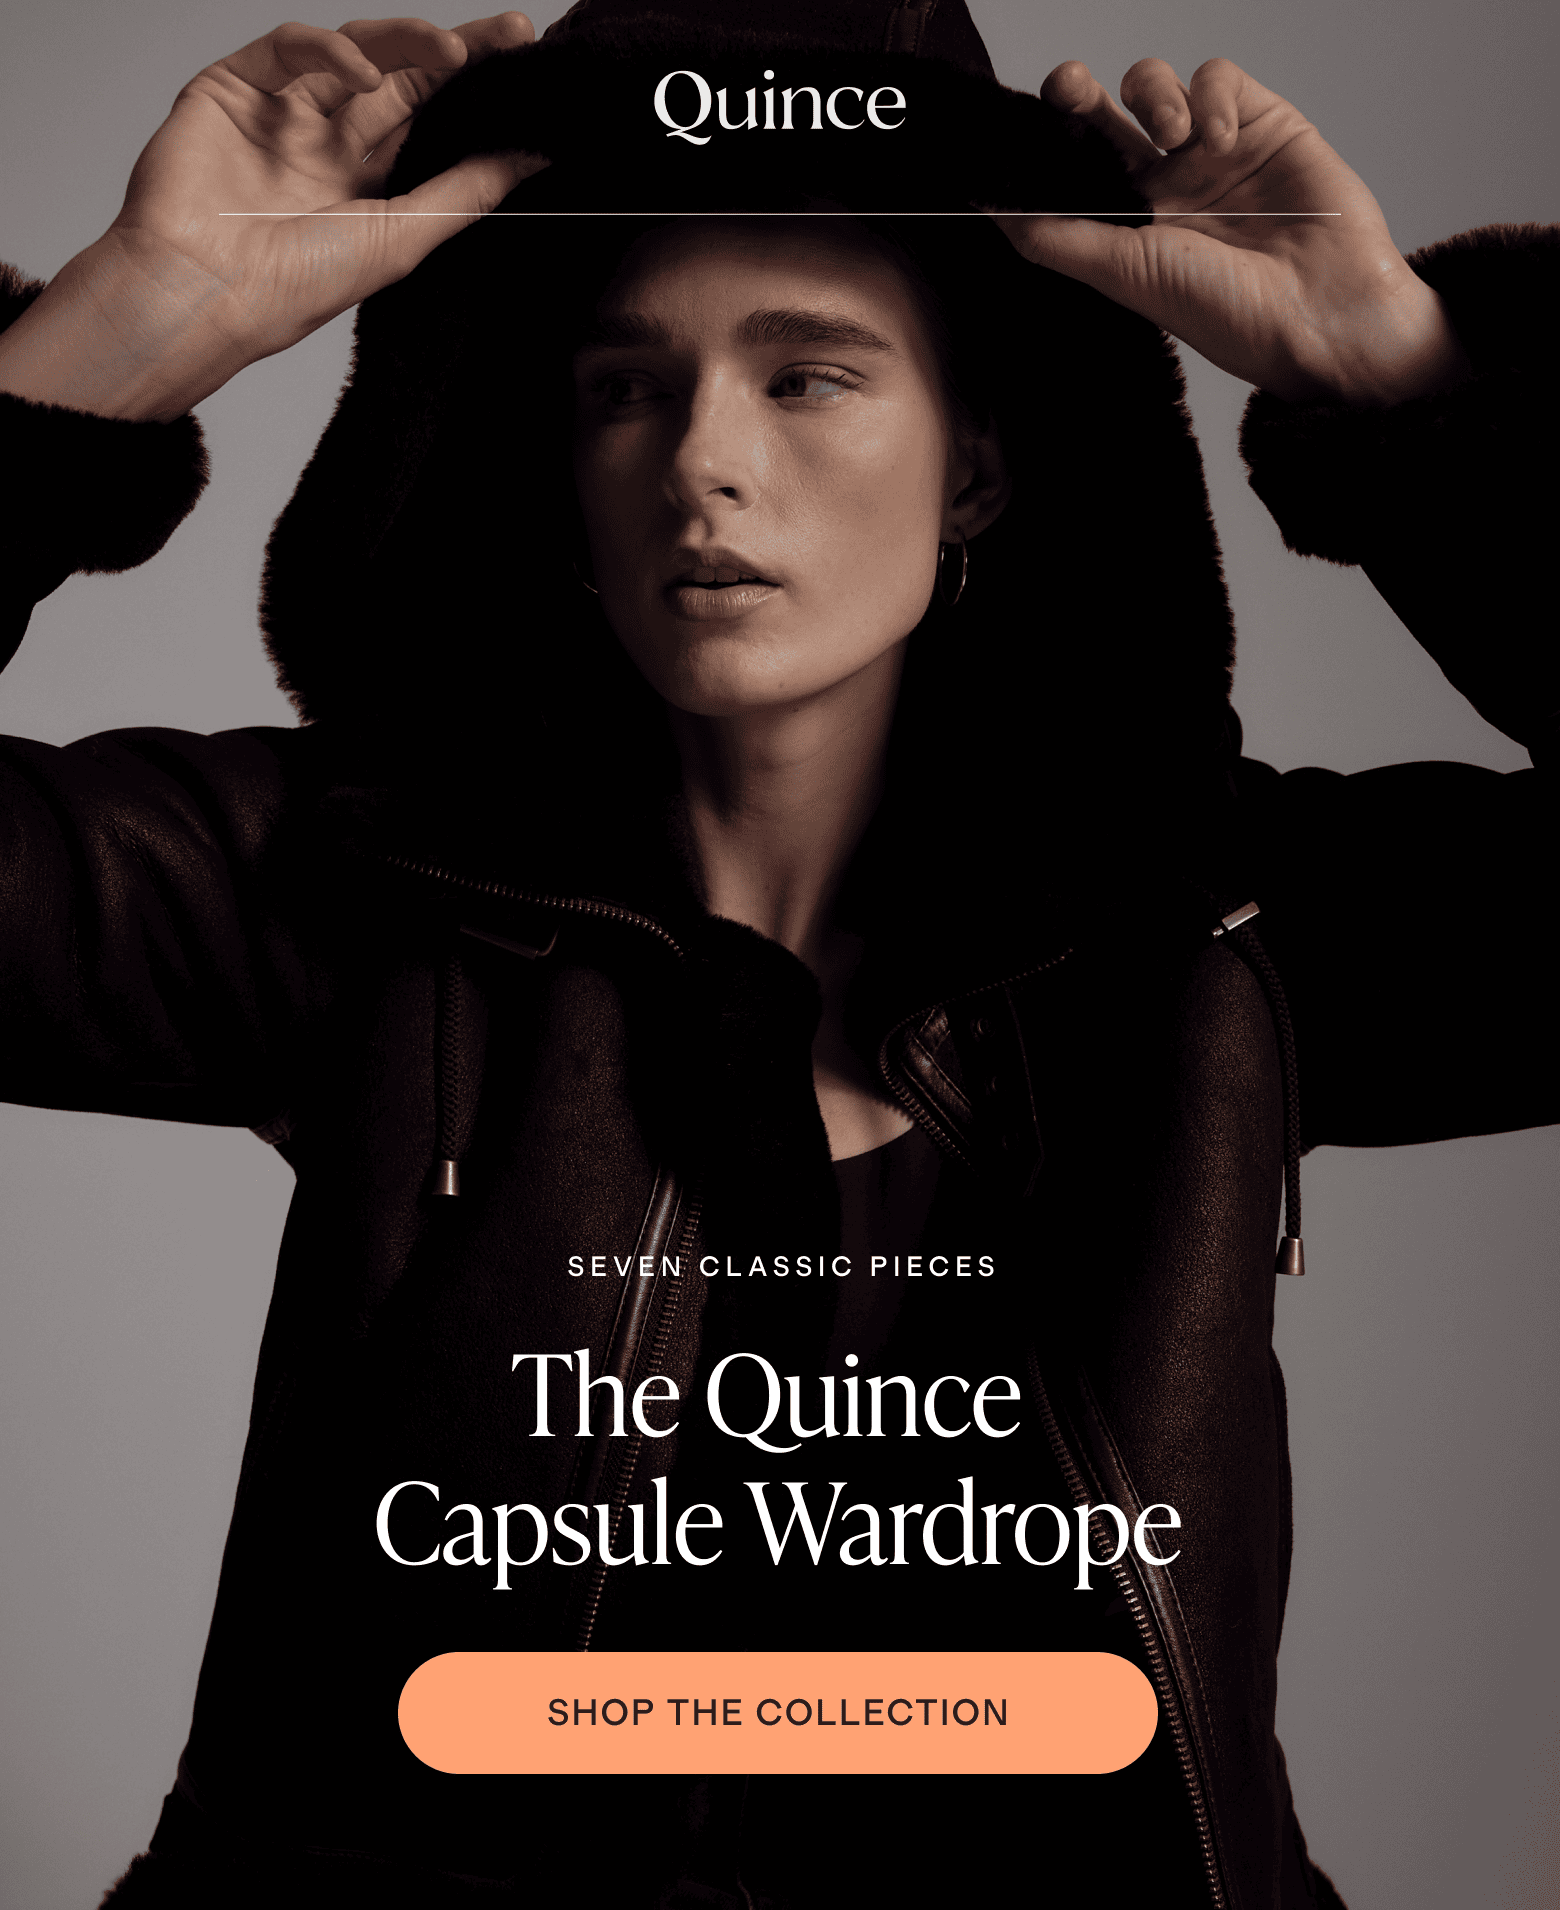 The Quince Capsule Wardrobe